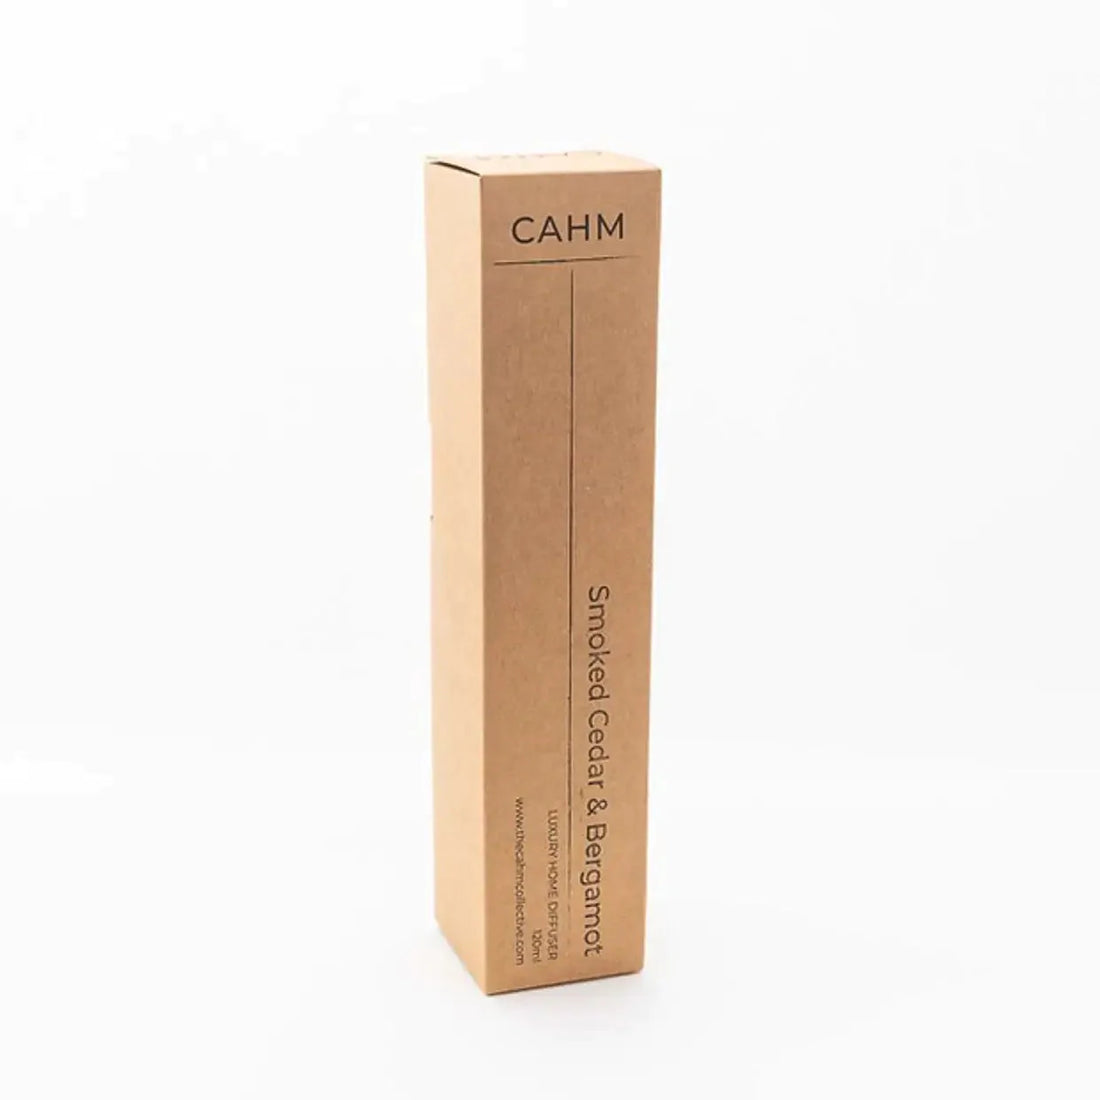 CAHM Luxury Diffuser - Smoked Cedar & Bergamot - Black Glass Home Fragrance CAHM